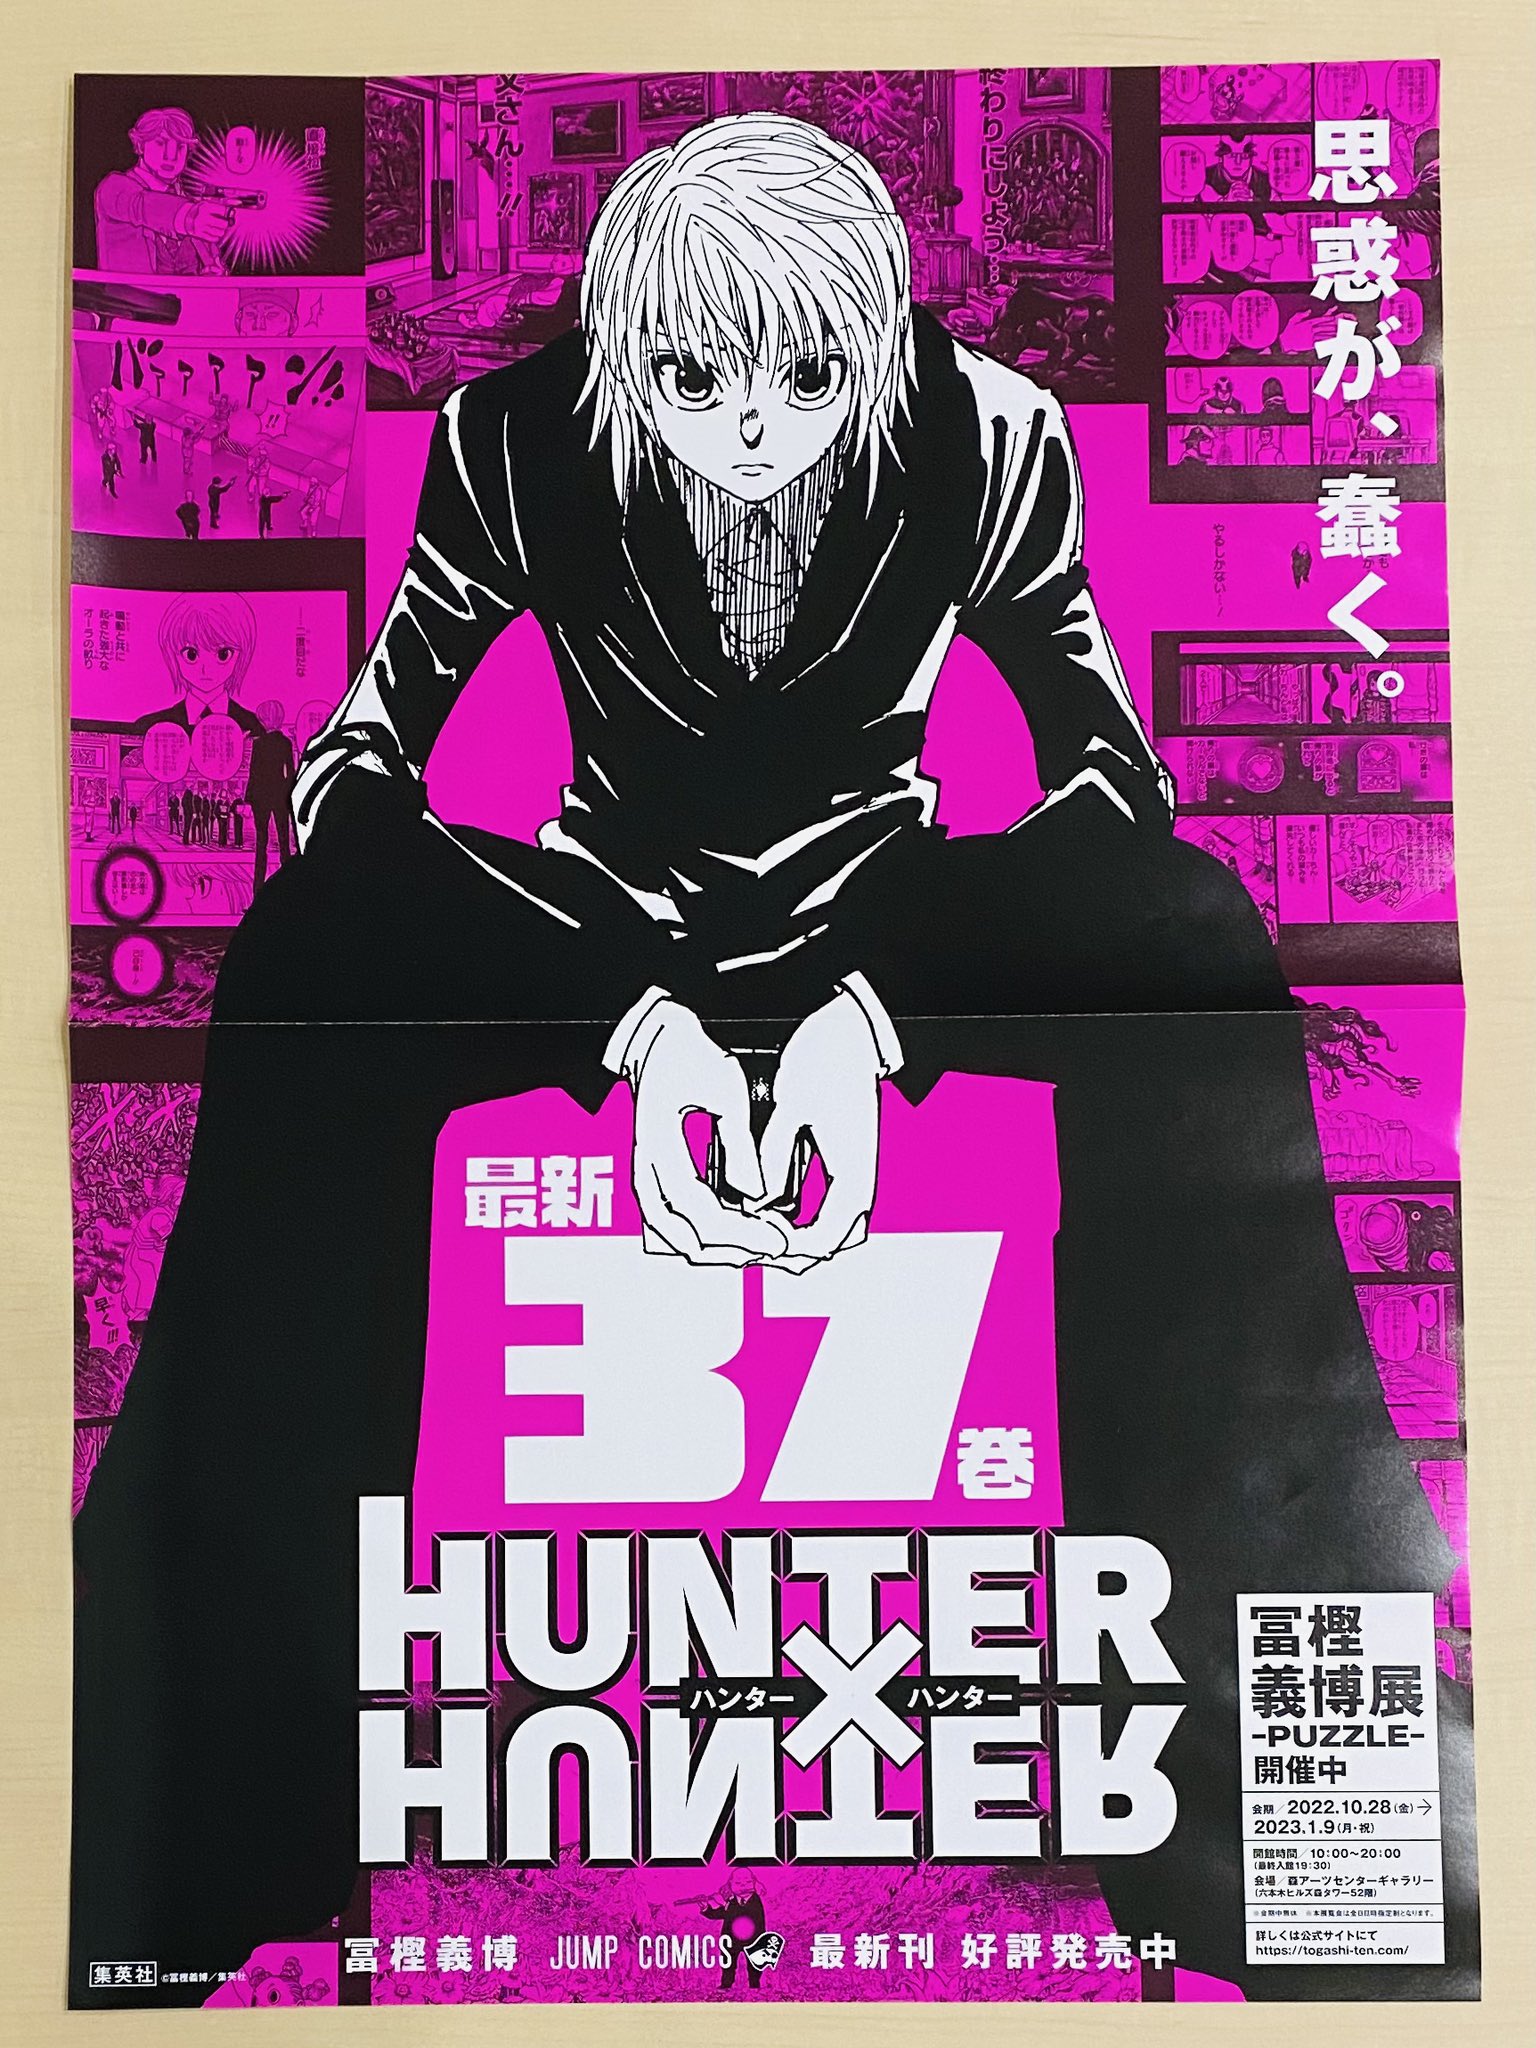 Hunter x Hunter Volume 37 Release Date Announced